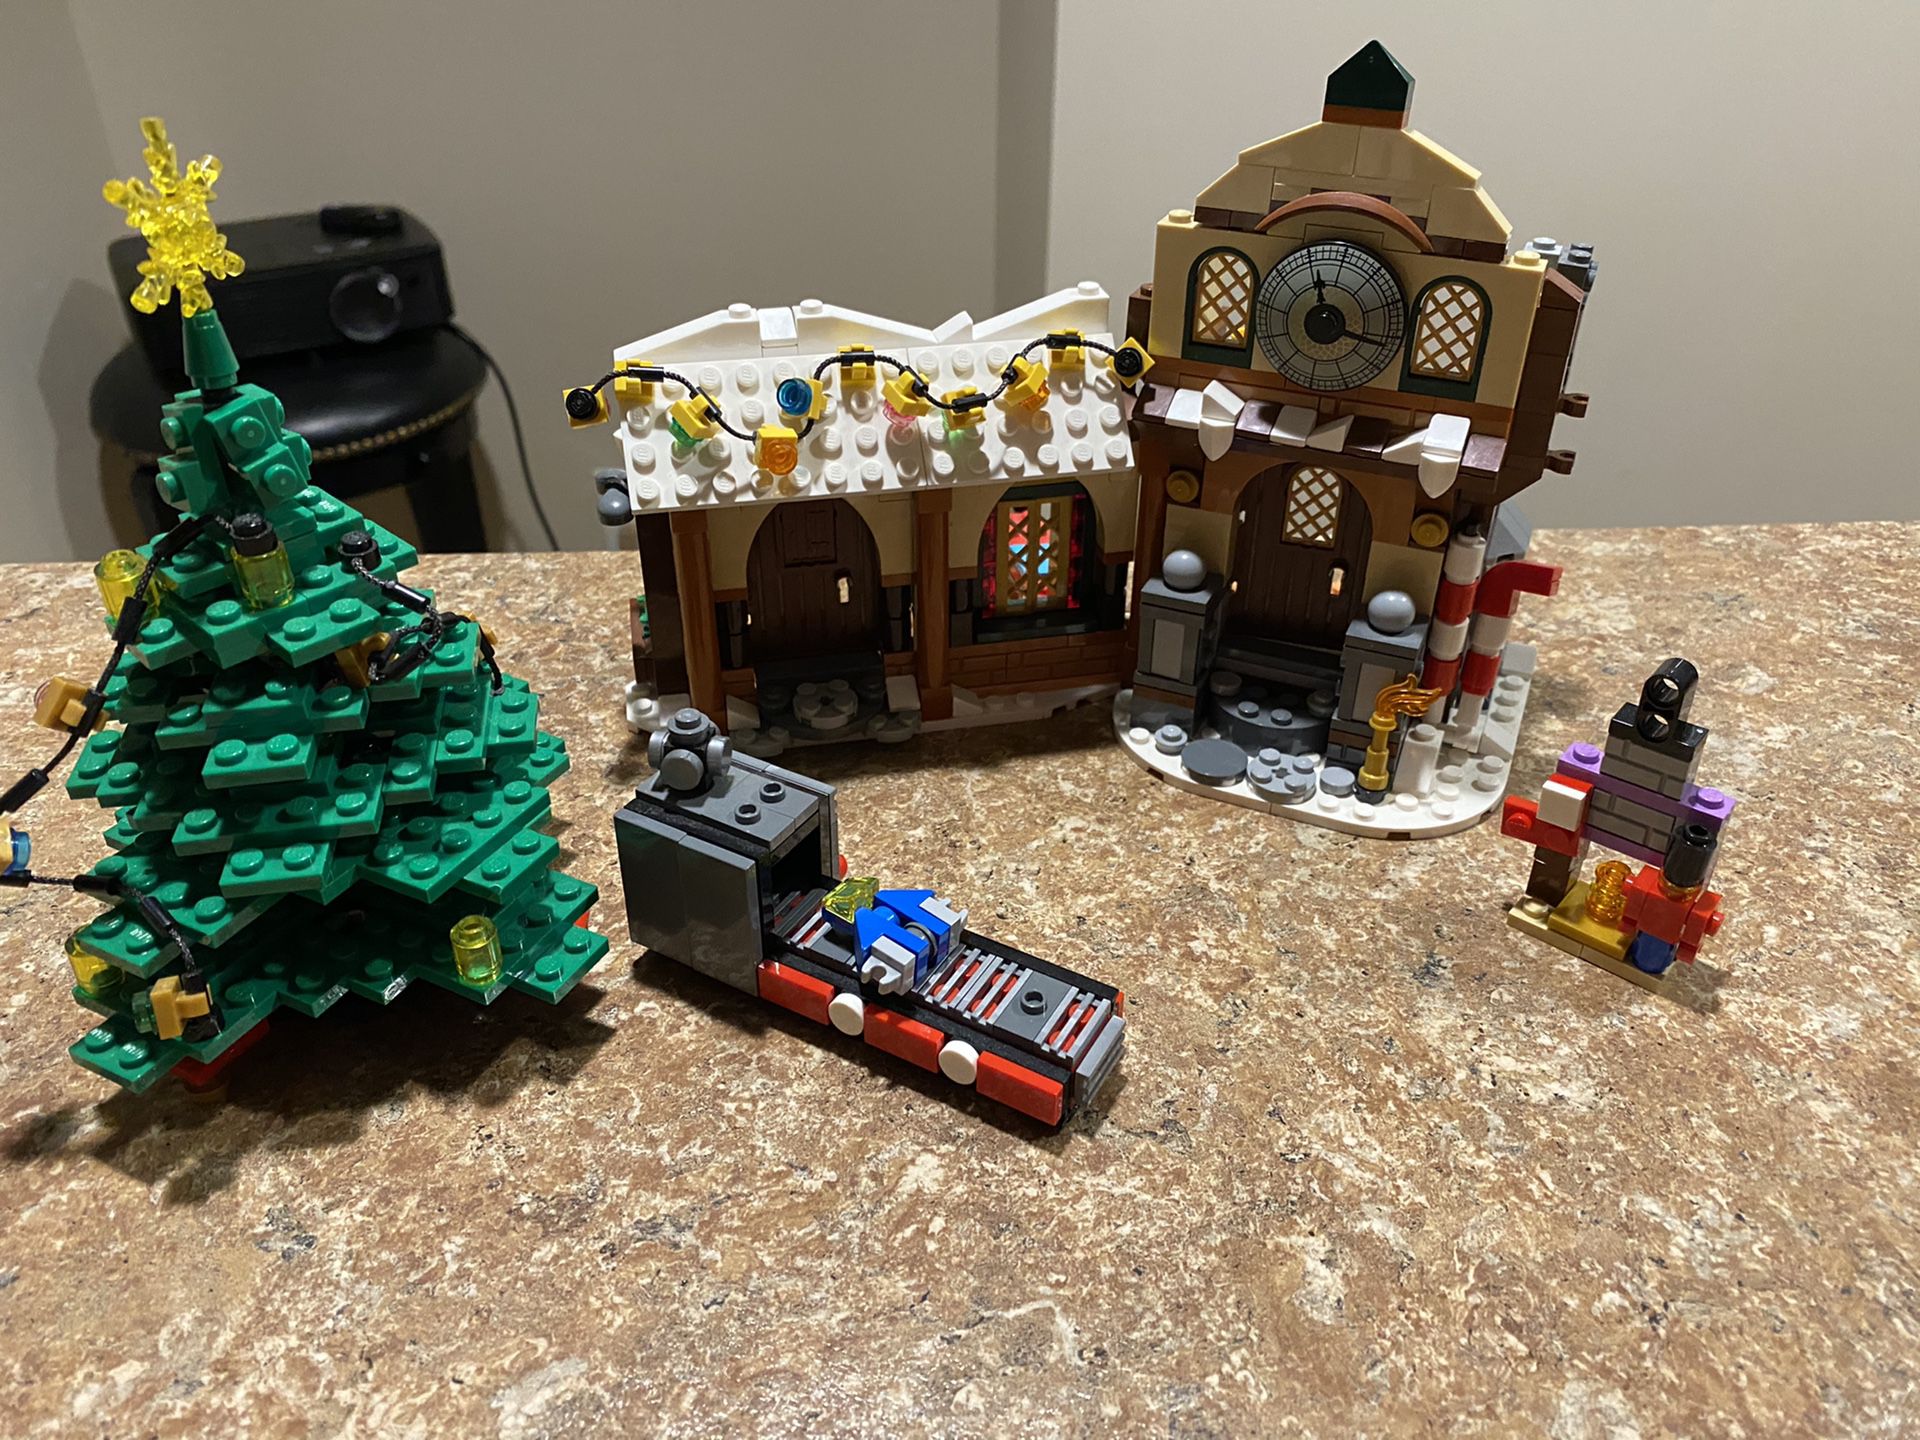 Lego Christmas set with tree